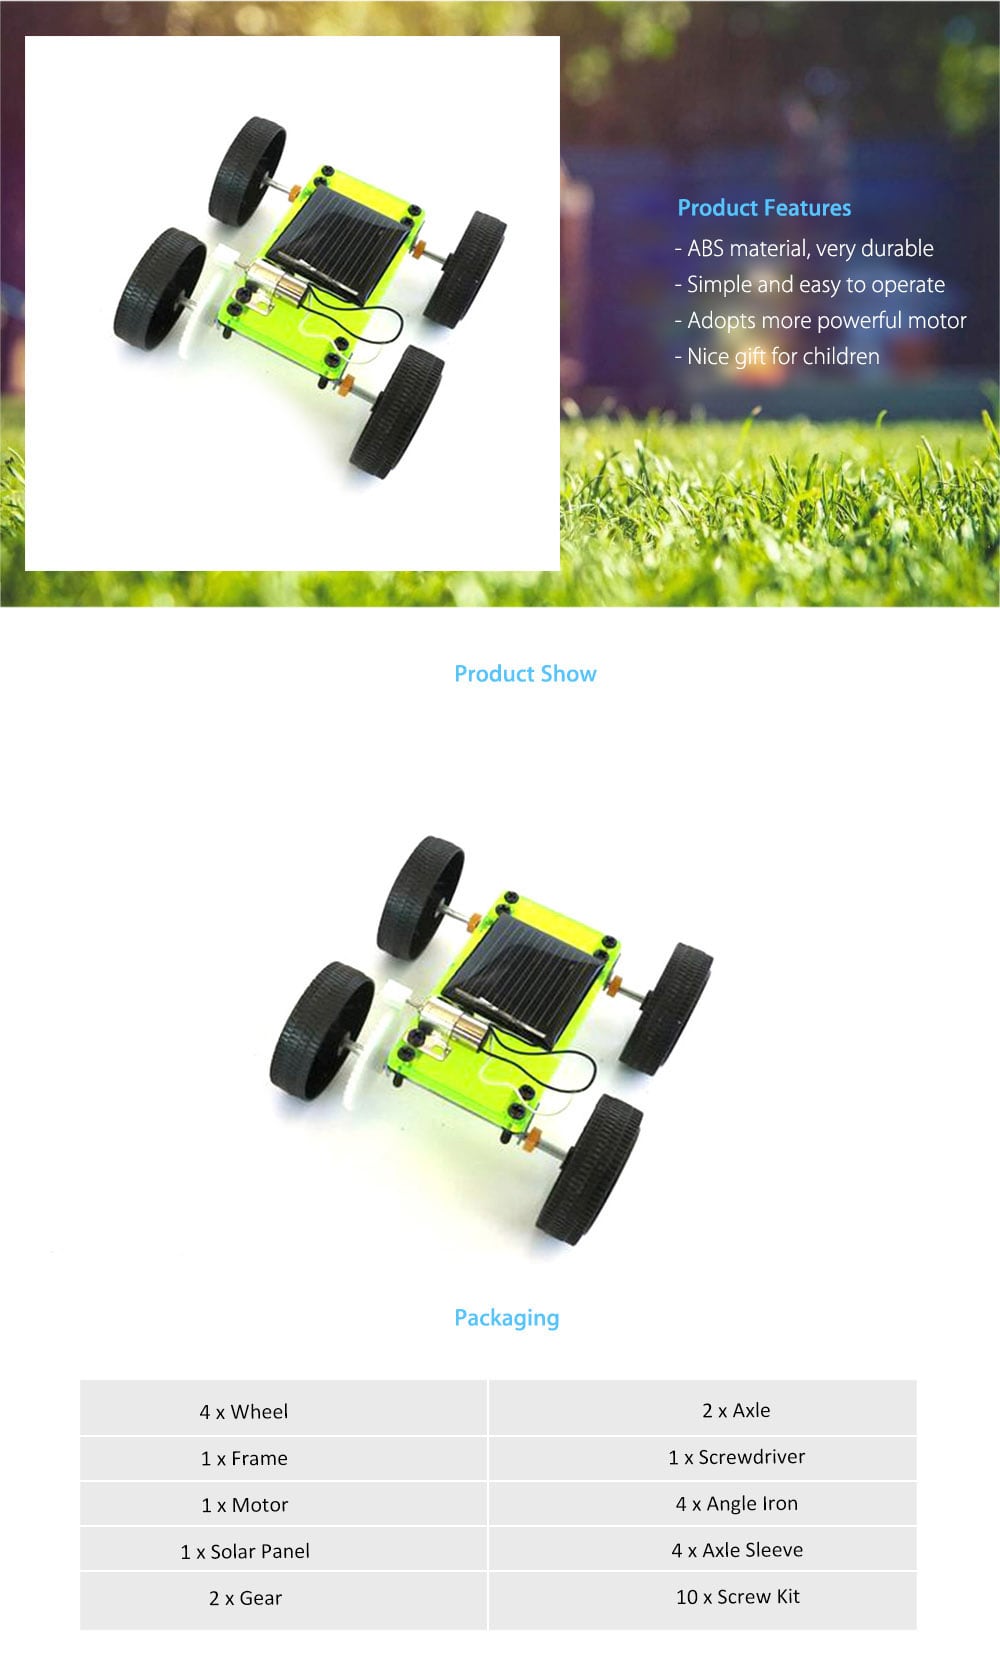 SC3B Creative Solar Car Model Assemble Toy DIY Projects- Colormix